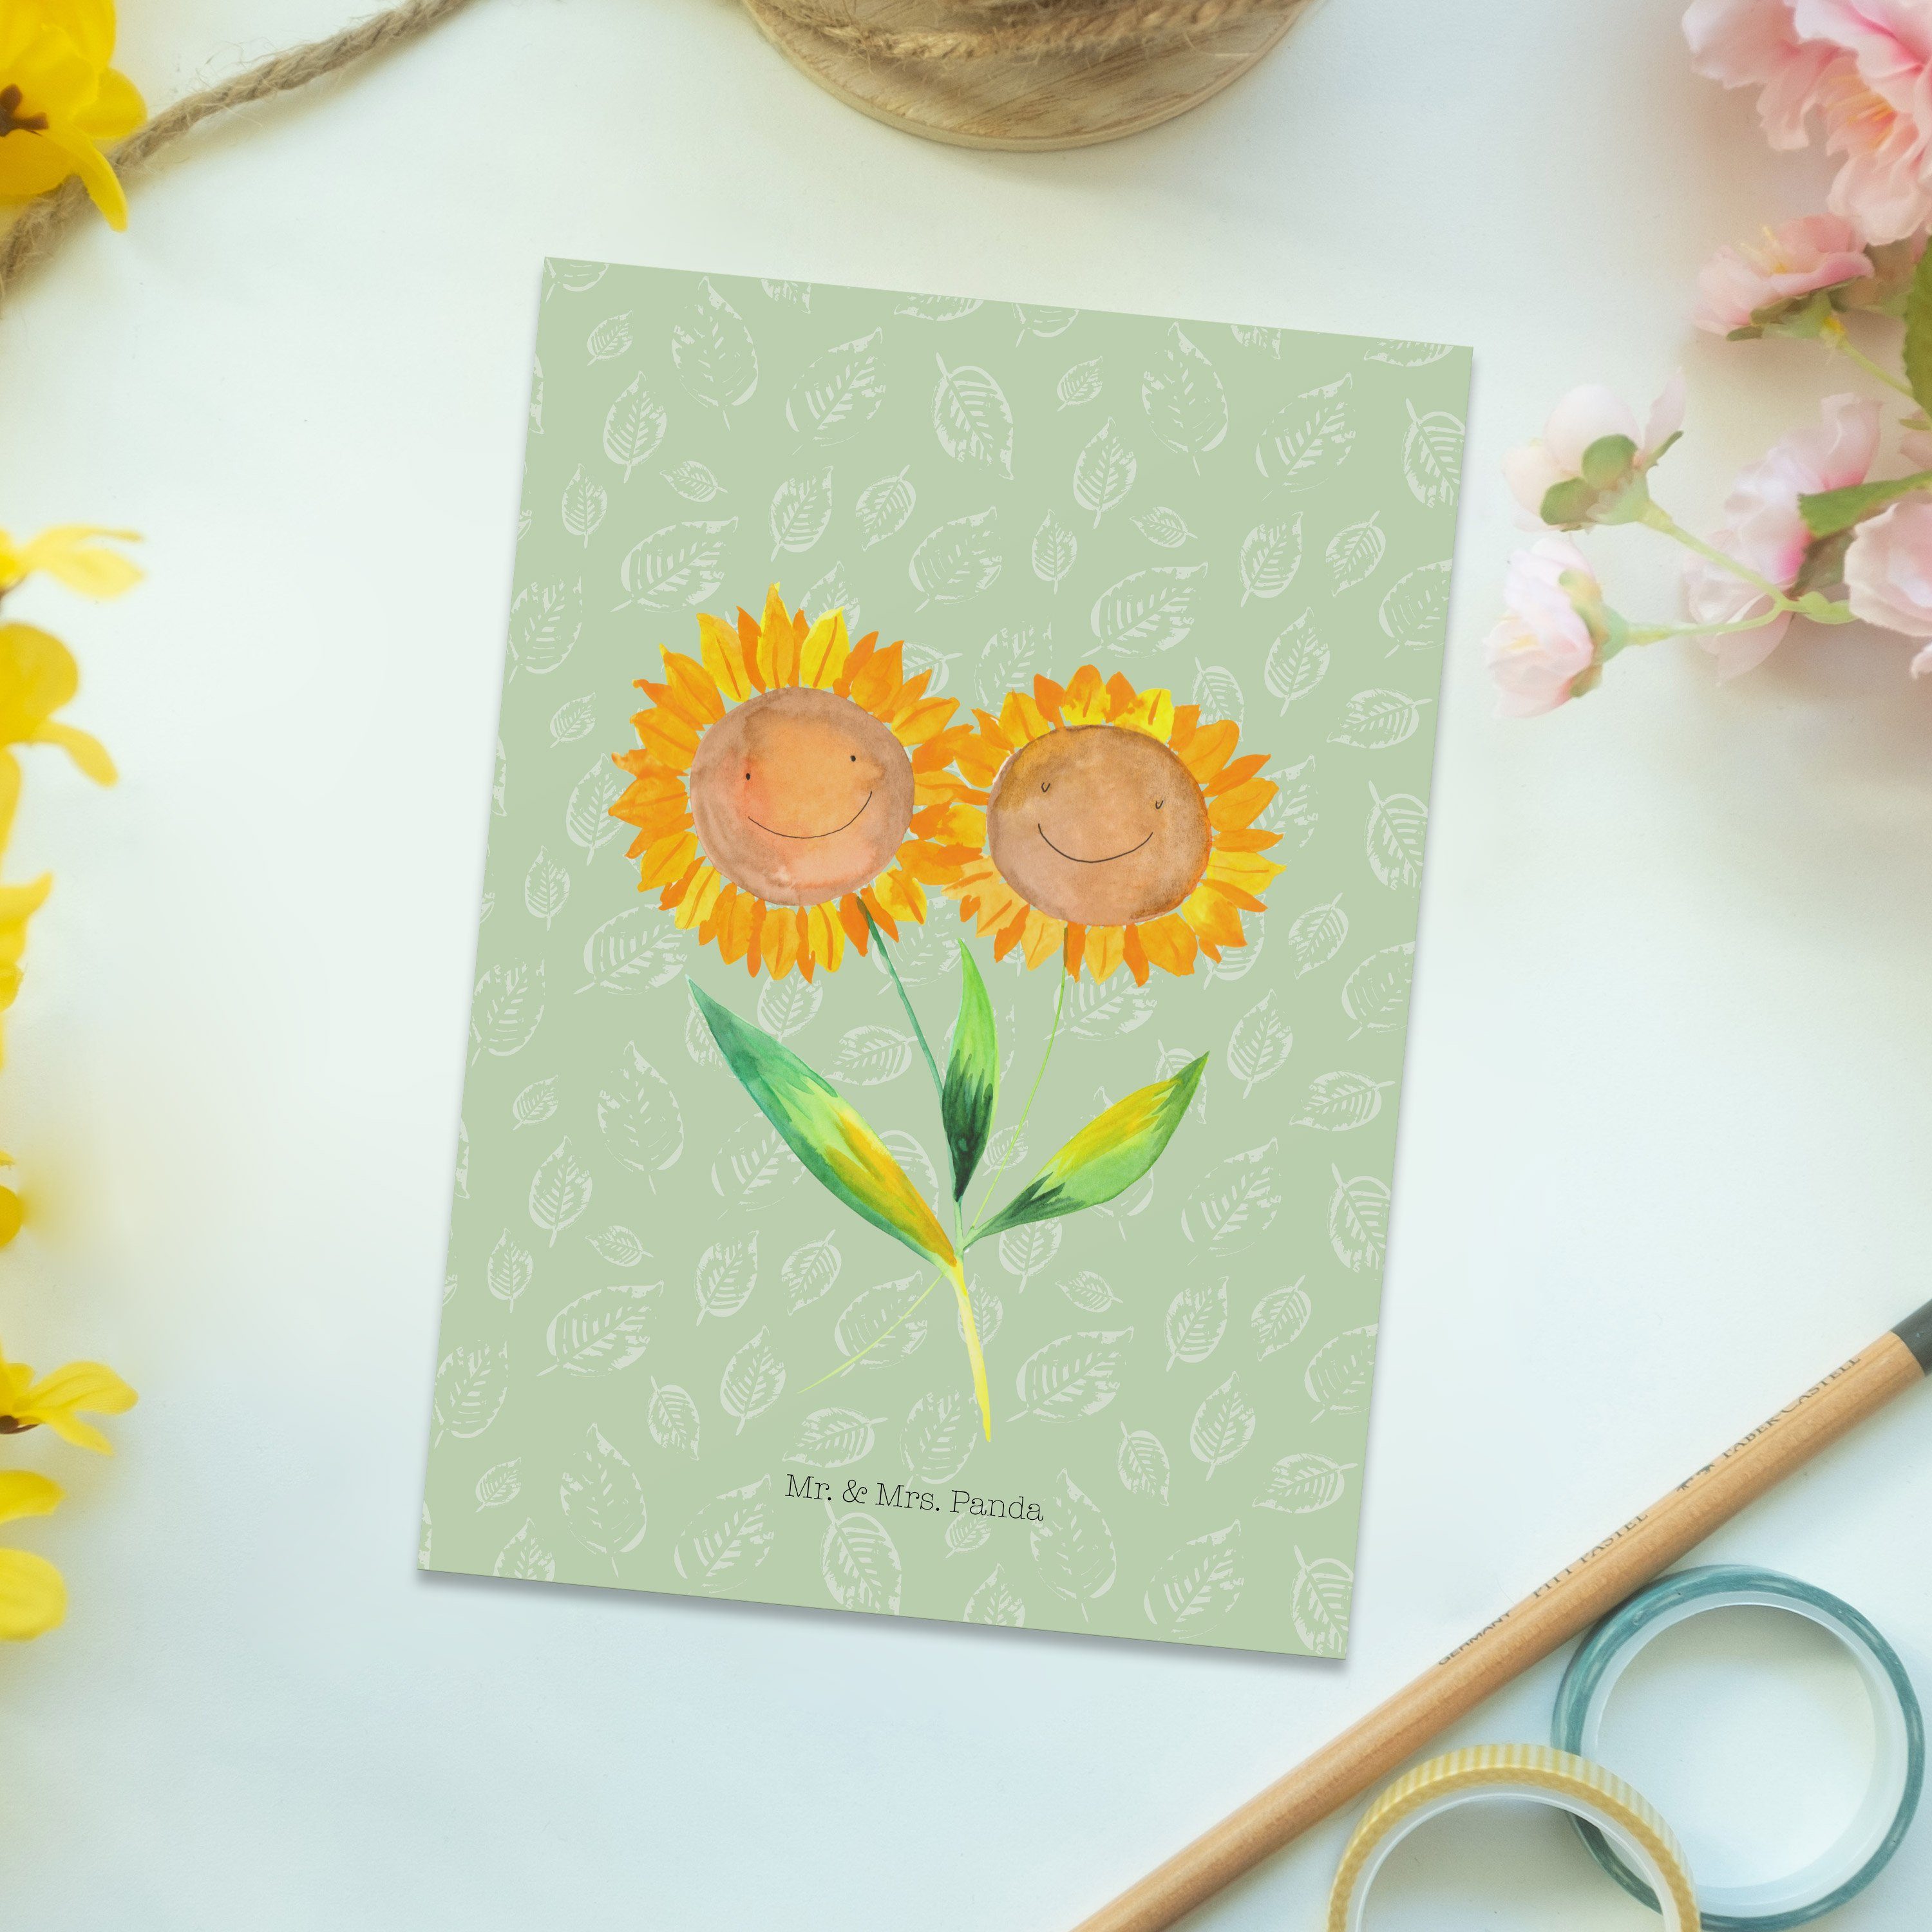 Mr. & Einladung, Panda Freundin, Mrs. - Blattgrün Sonnenblume Sonnenblumen - Postkarte Geschenk